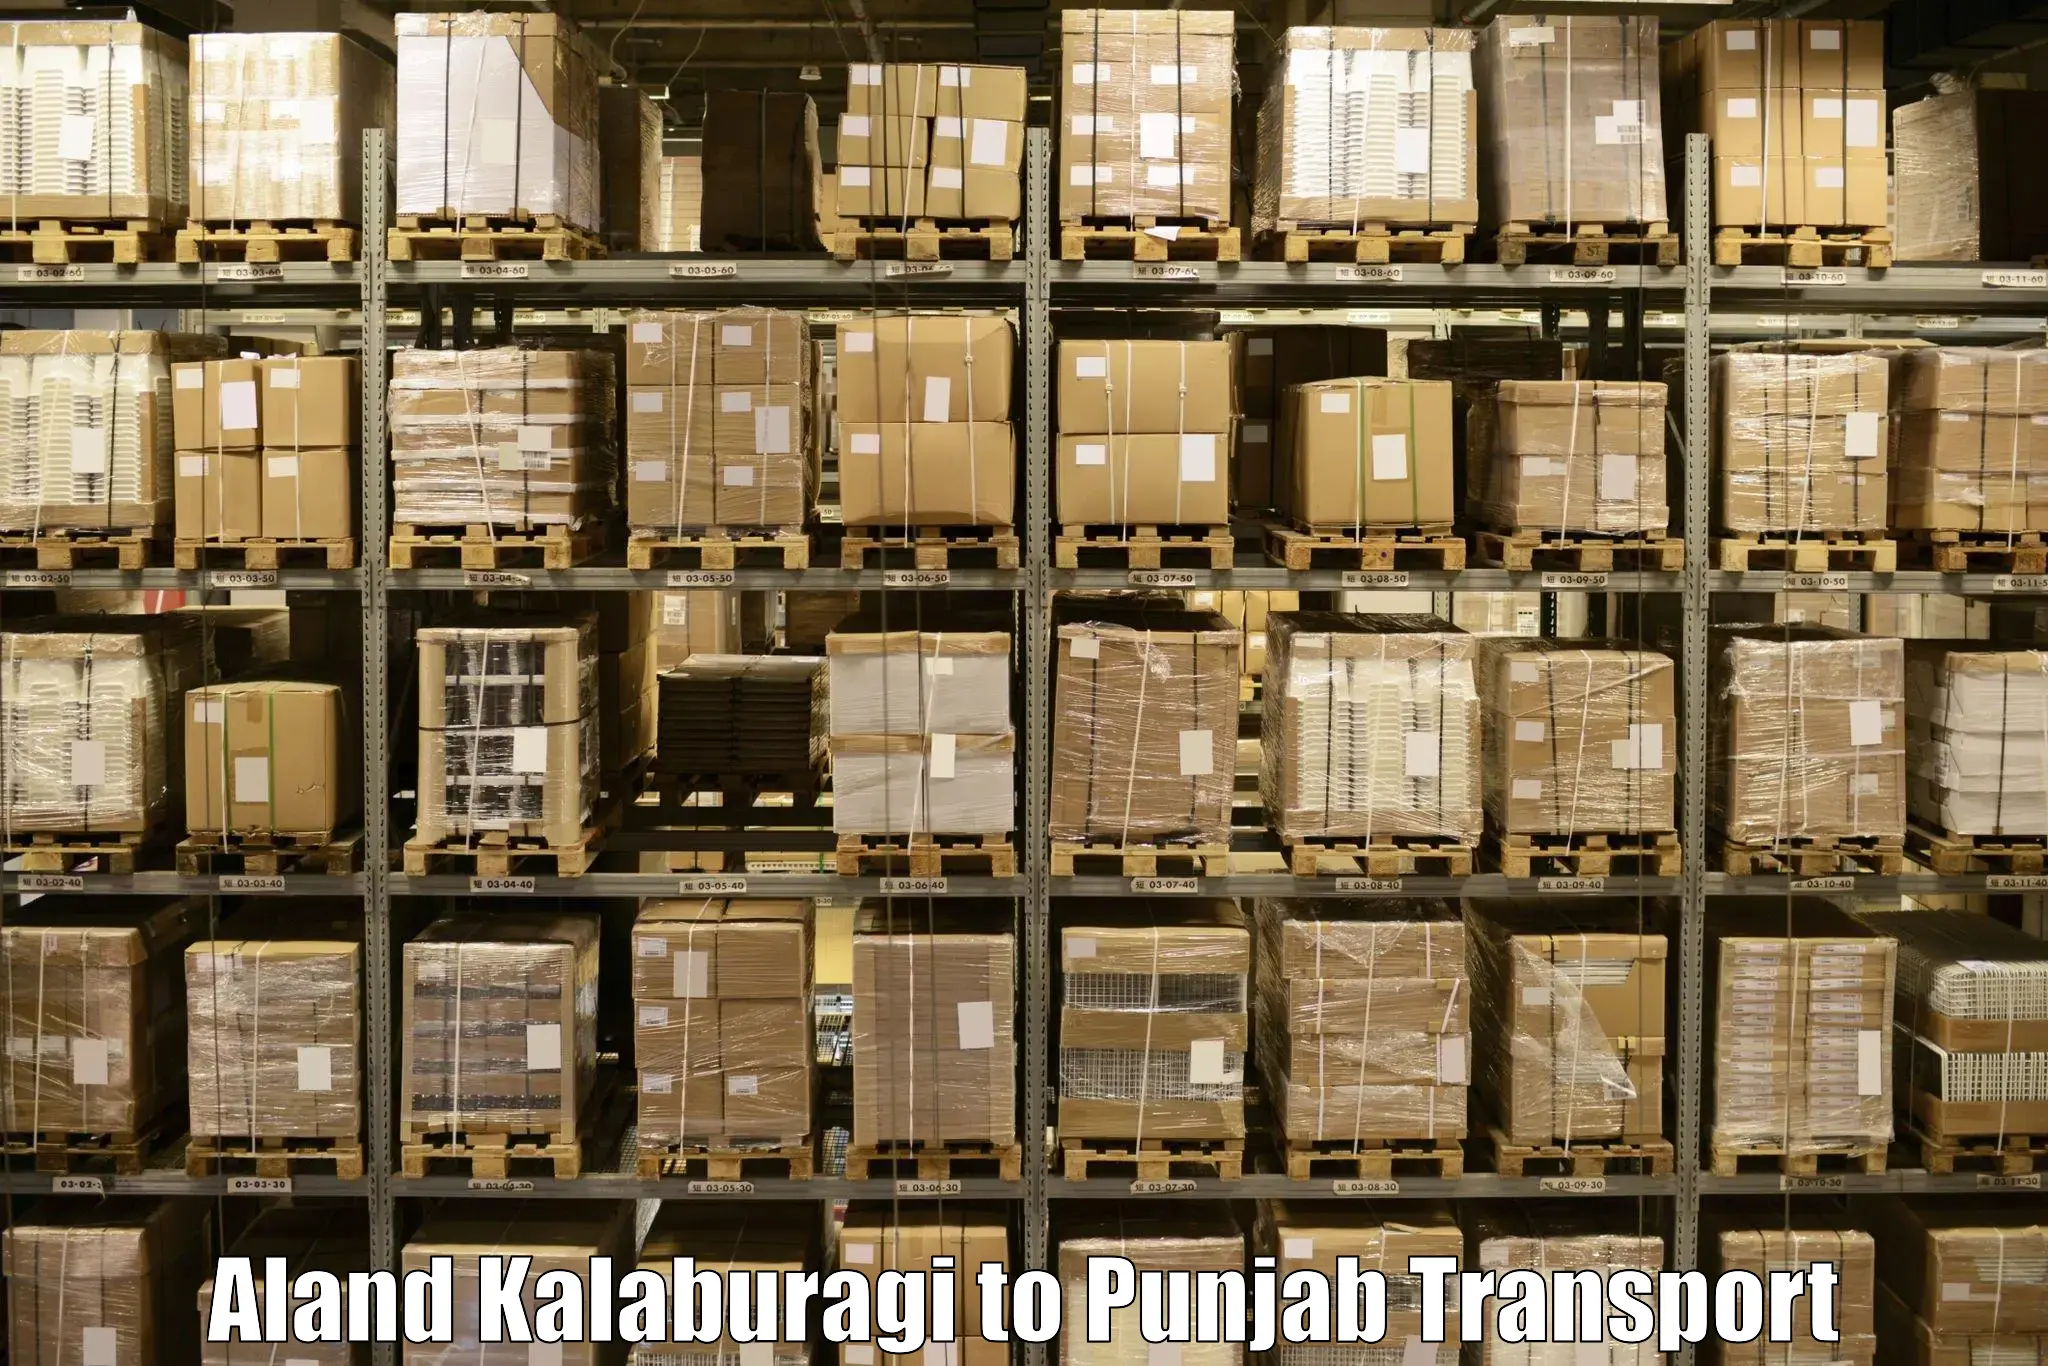 Nationwide transport services Aland Kalaburagi to Rajpura